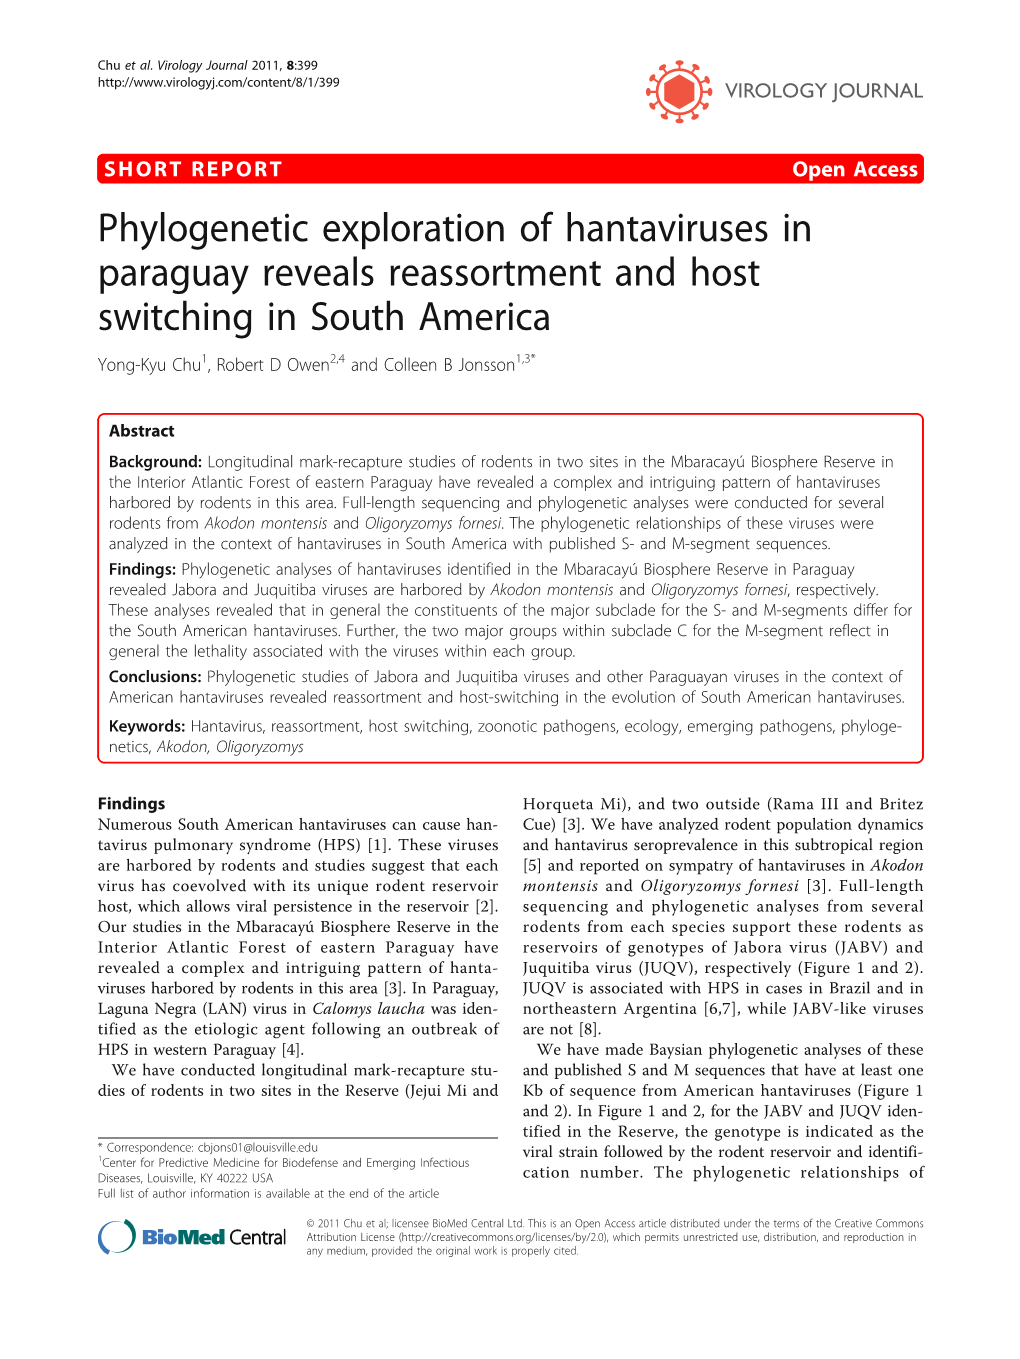 Phylogenetic Exploration of Hantaviruses in Paraguay Reveals